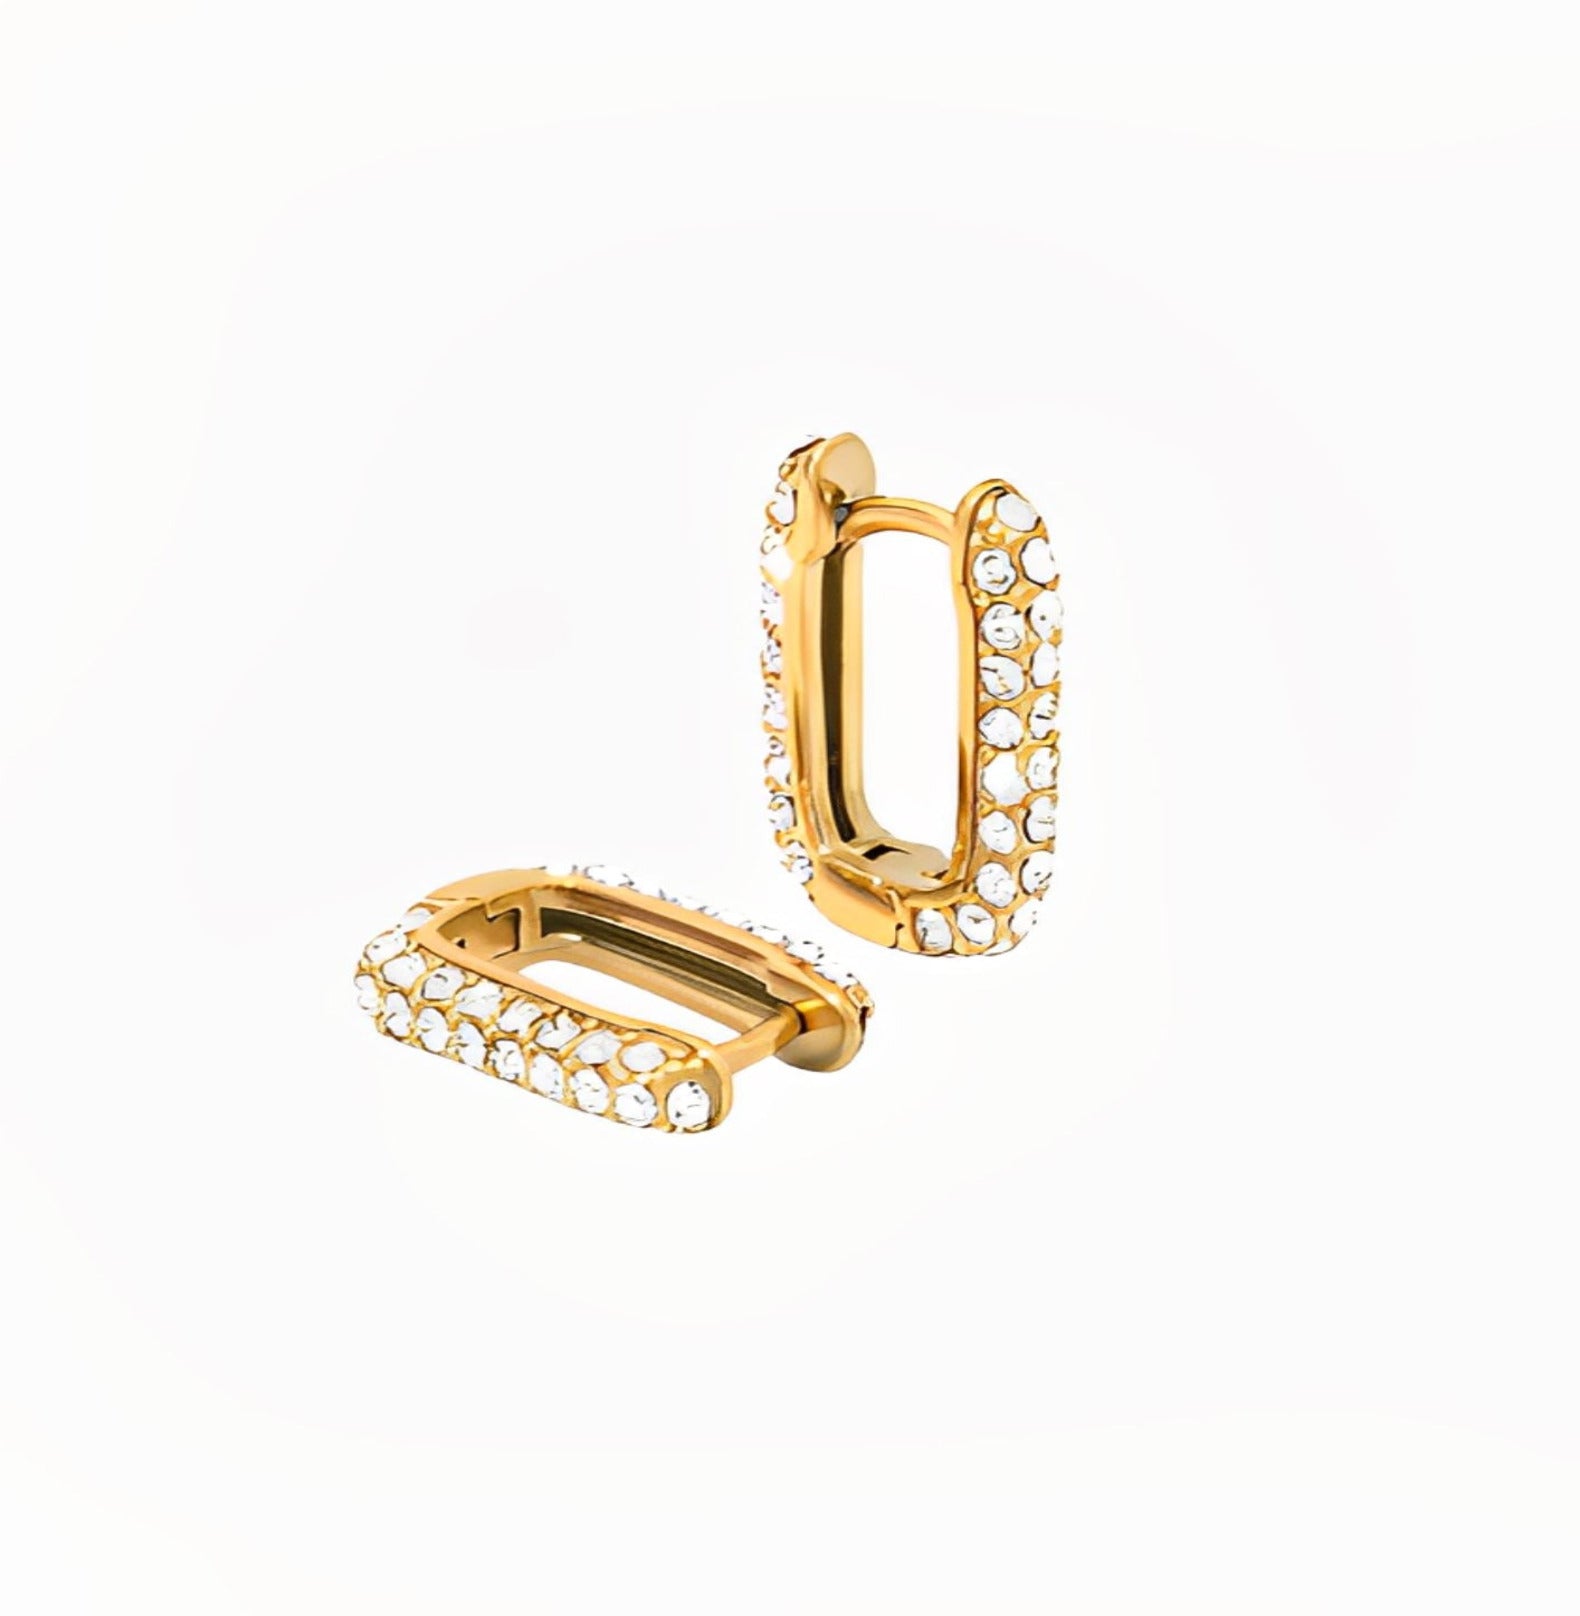 U HOOPS DIAMOND EARRINGS earing Yubama Jewelry Online Store - The Elegant Designs of Gold and Silver ! 